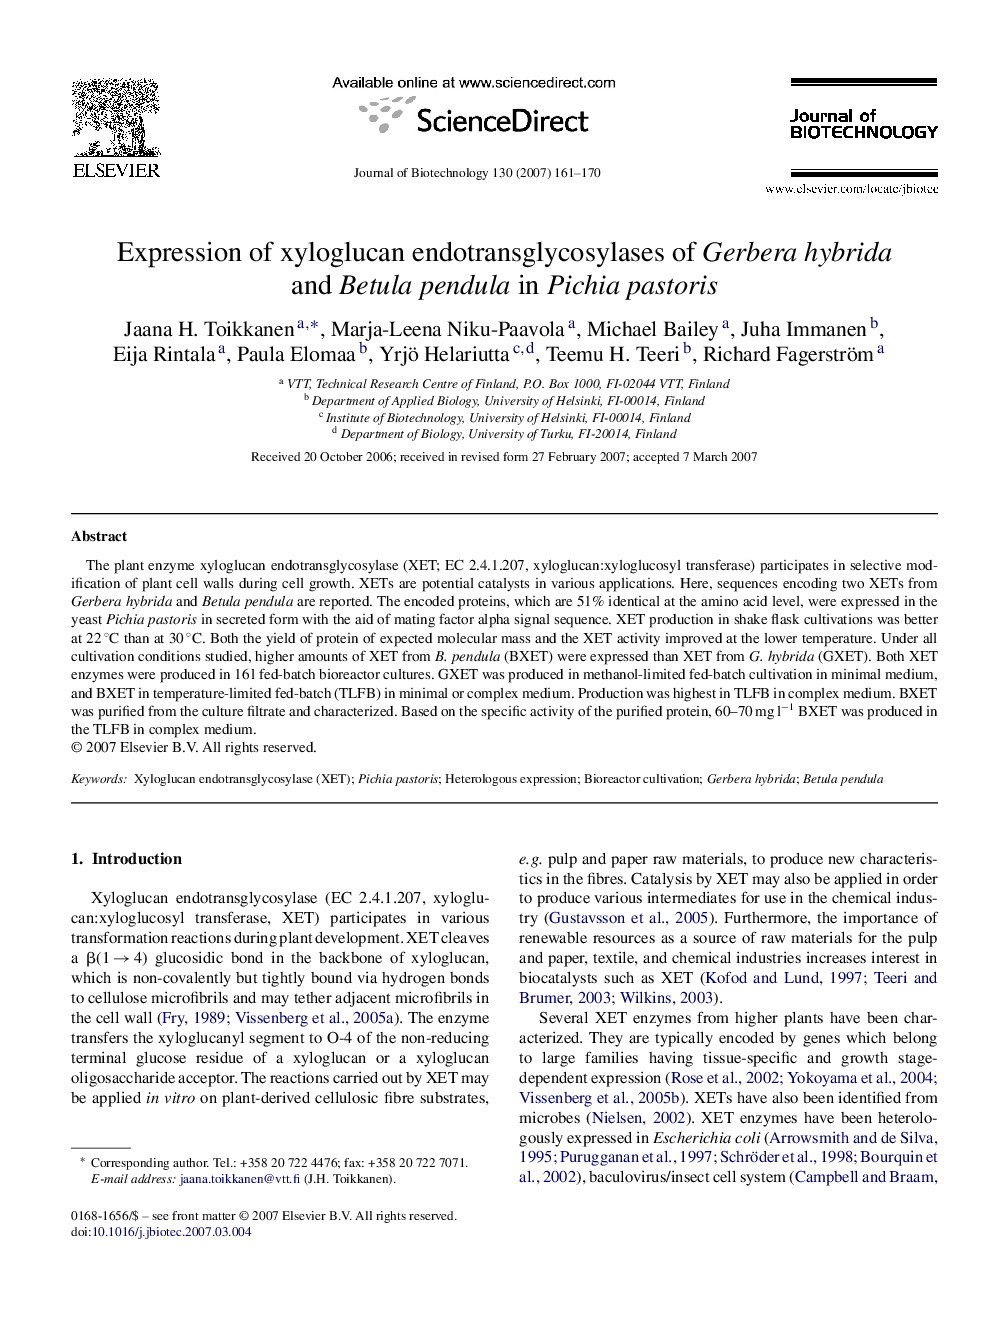 Expression of xyloglucan endotransglycosylases of Gerbera hybrida and Betula pendula in Pichia pastoris